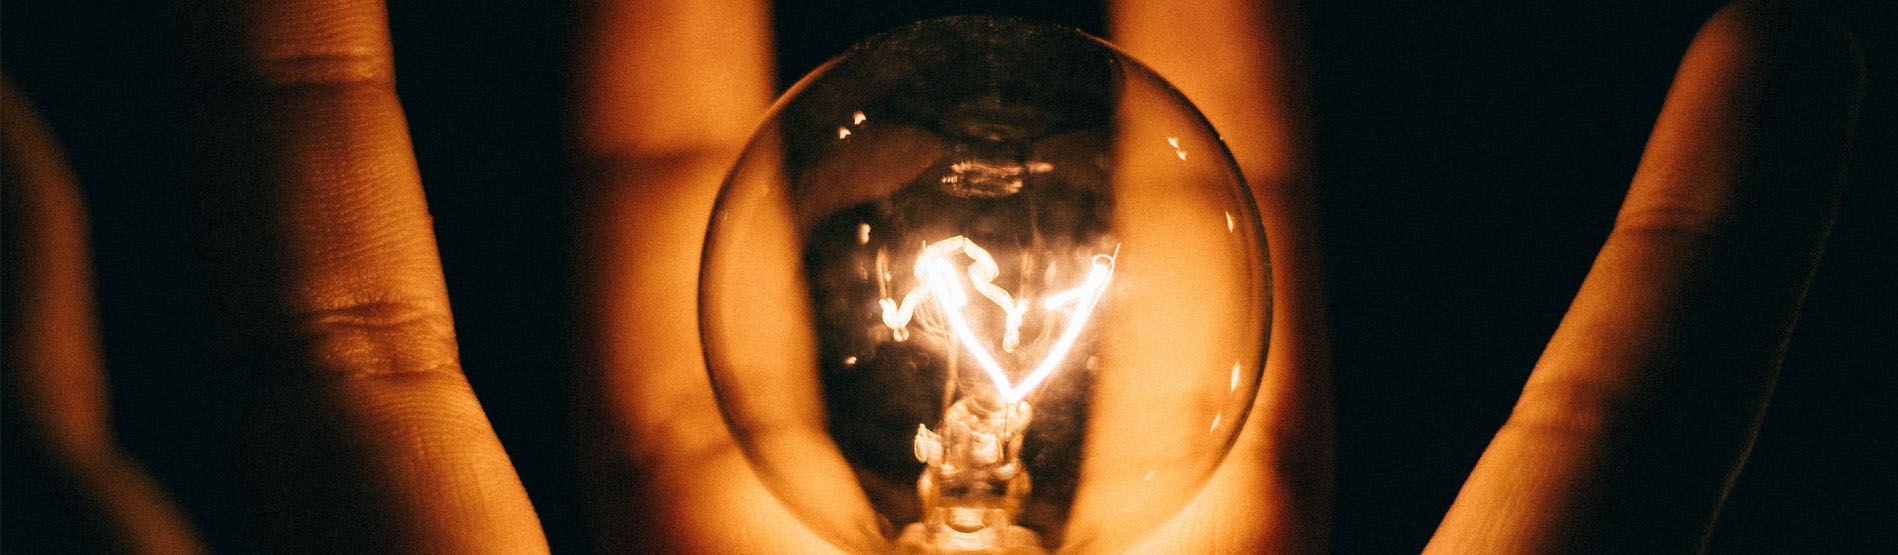 An image of a light bulb